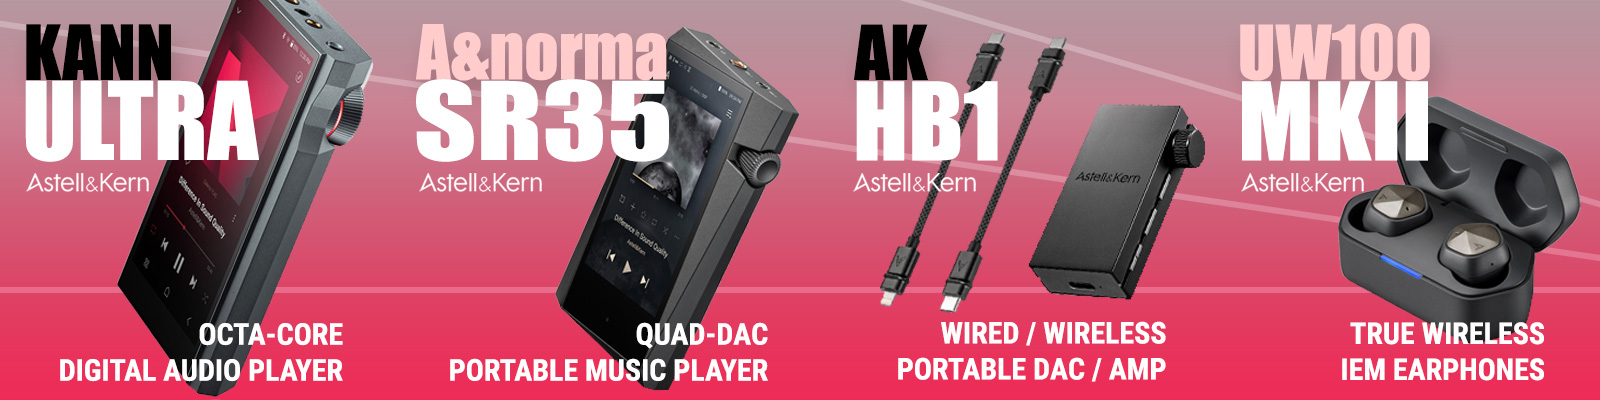 Astell&Kern KANN ULTRA / SR35 / AK HB1 / UW100MK2 | Available at Audio Sanctuary